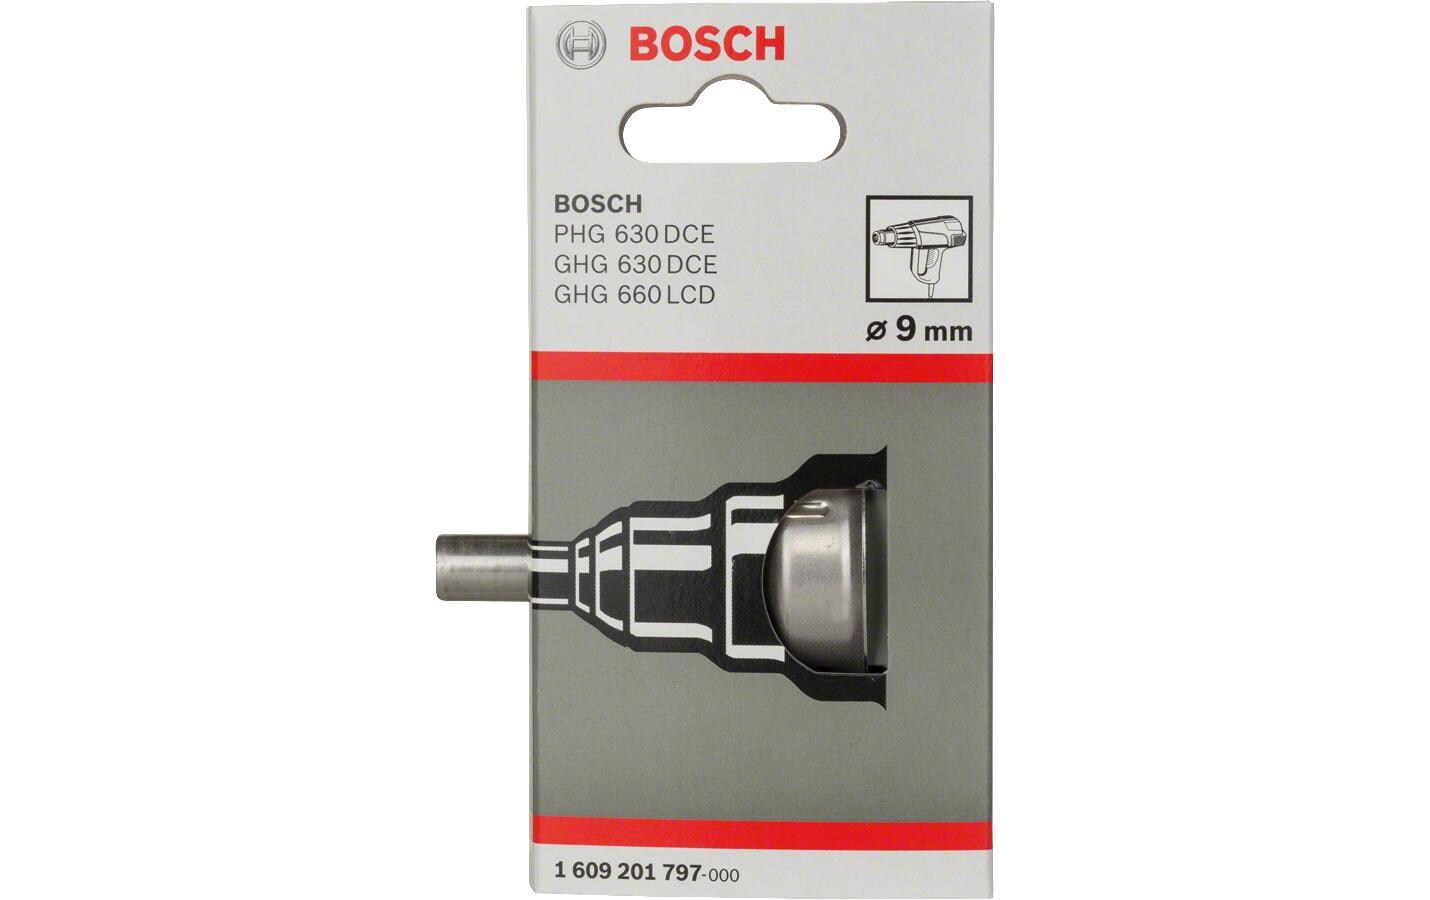 Bosch Reduction nozzle 9 mm, hot air gun 1609201797 Power Tool Services